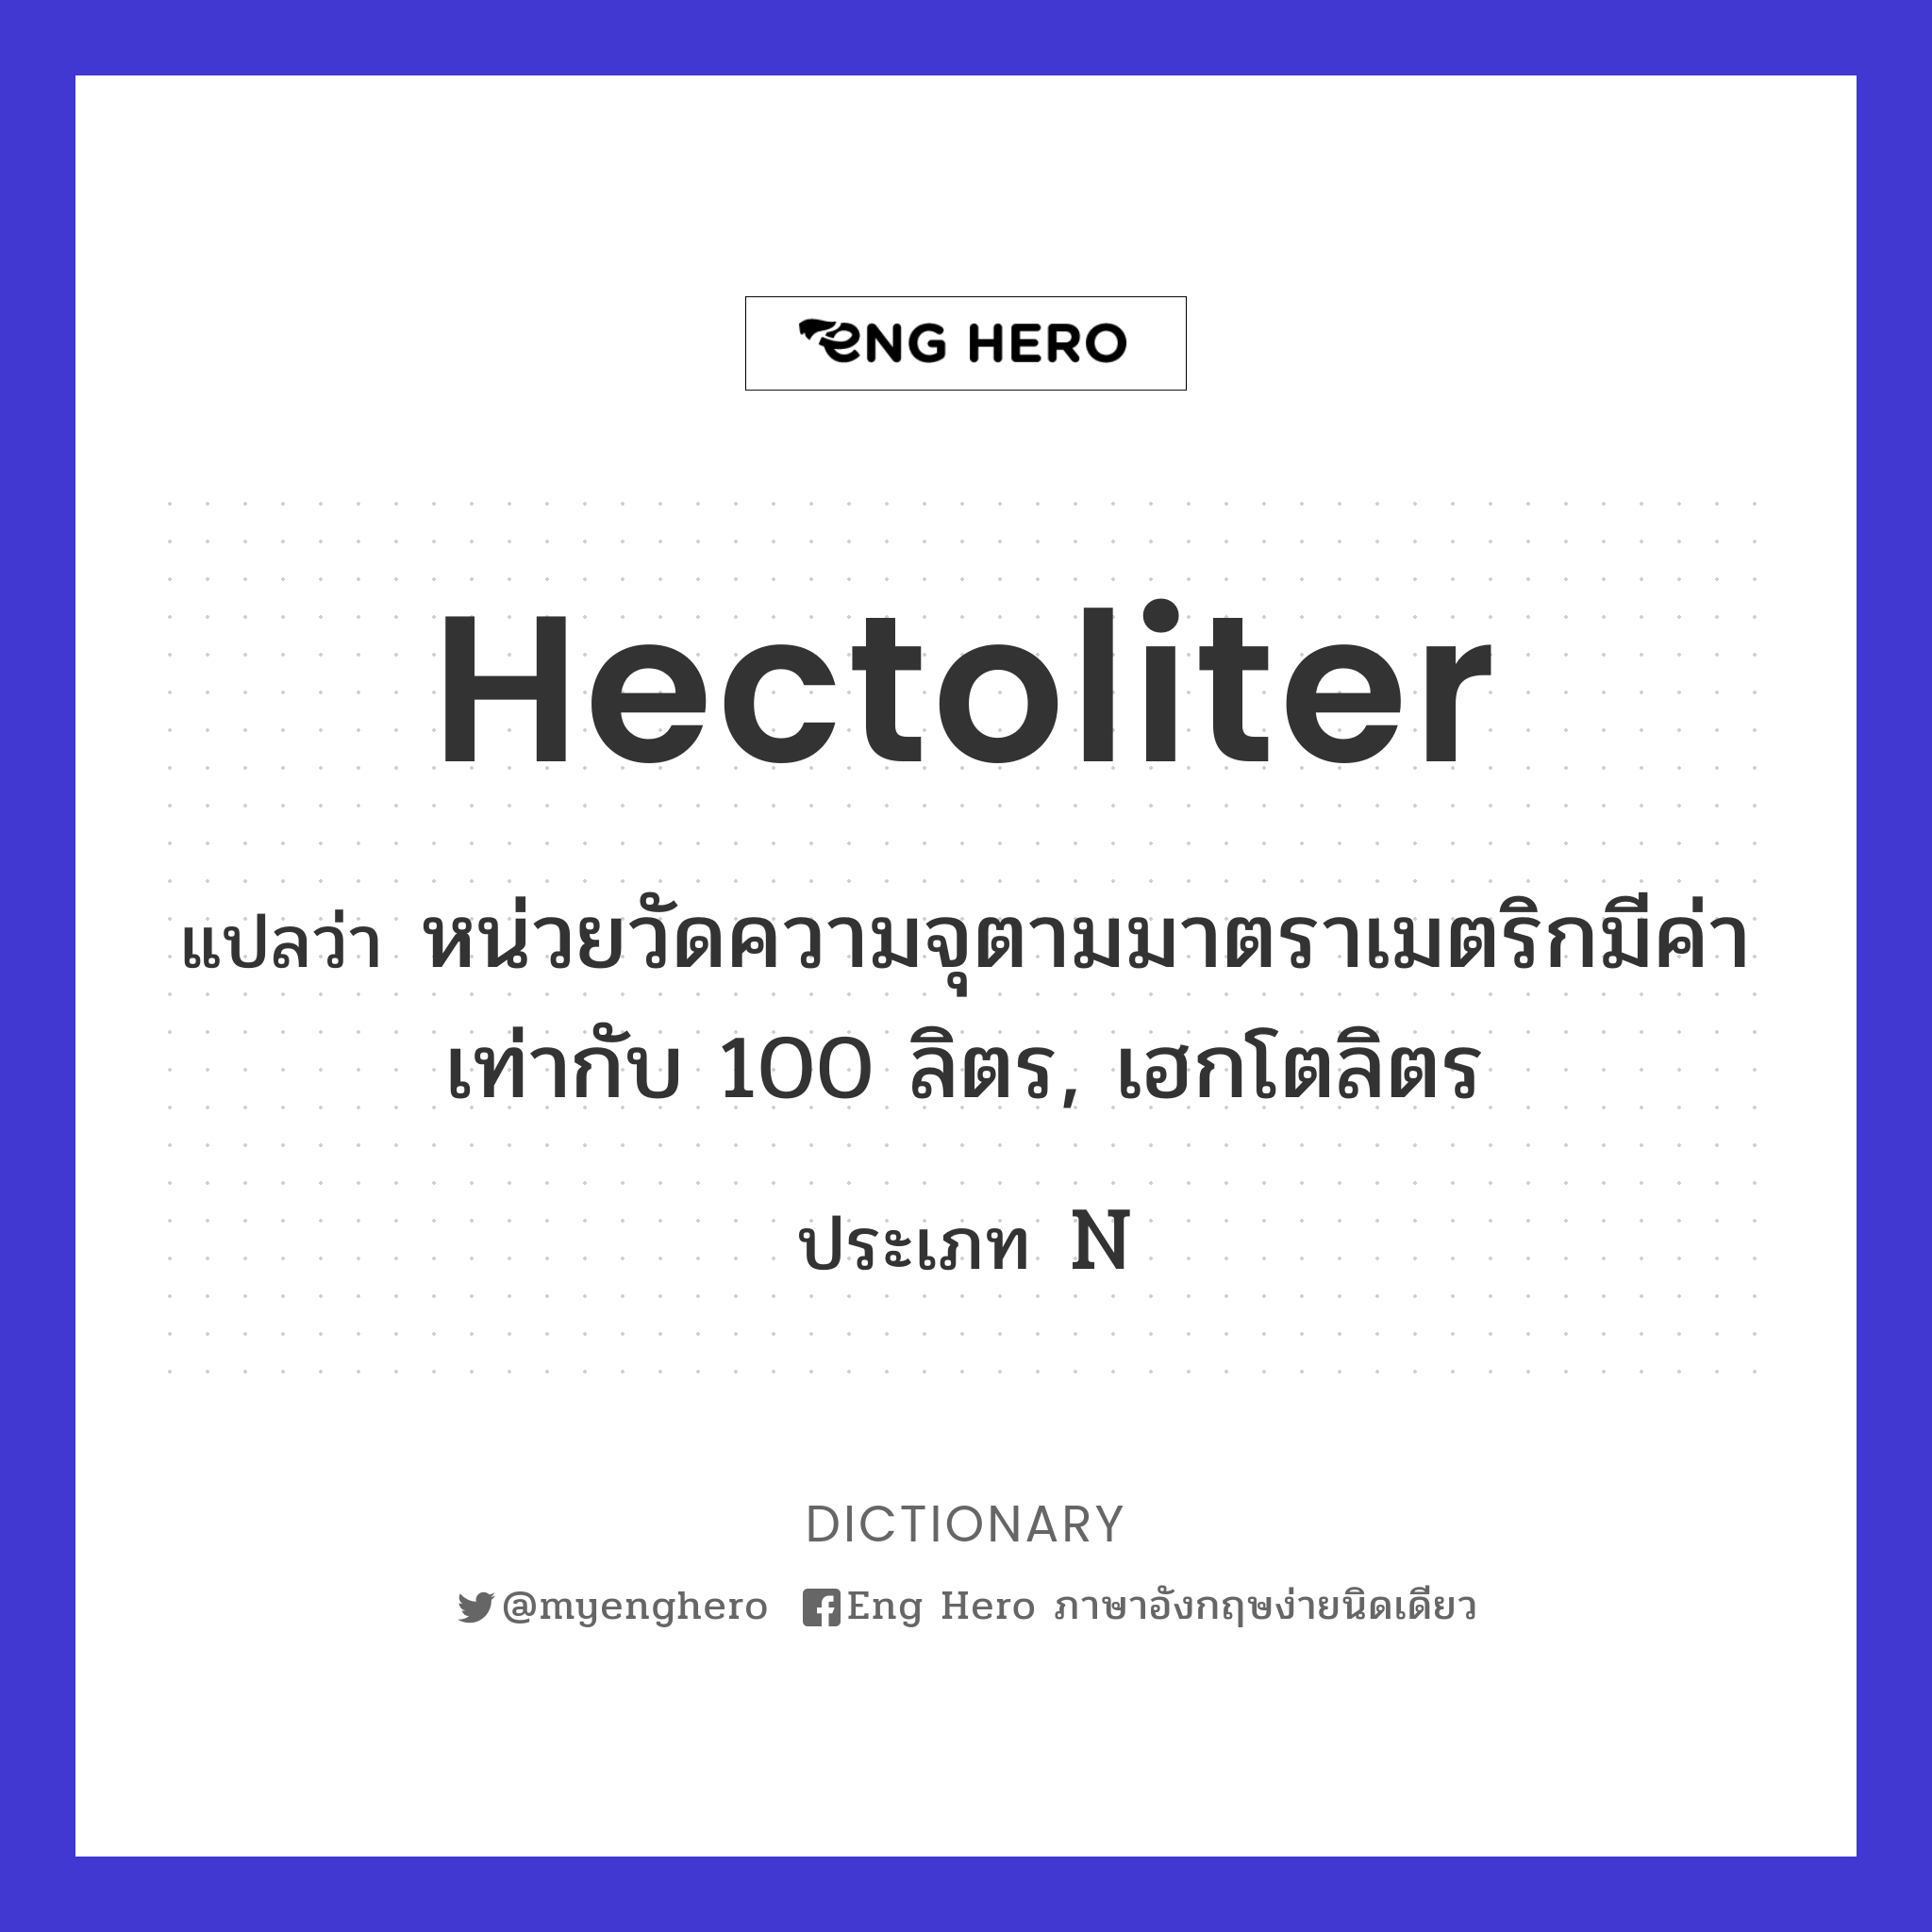 hecta liter to liter